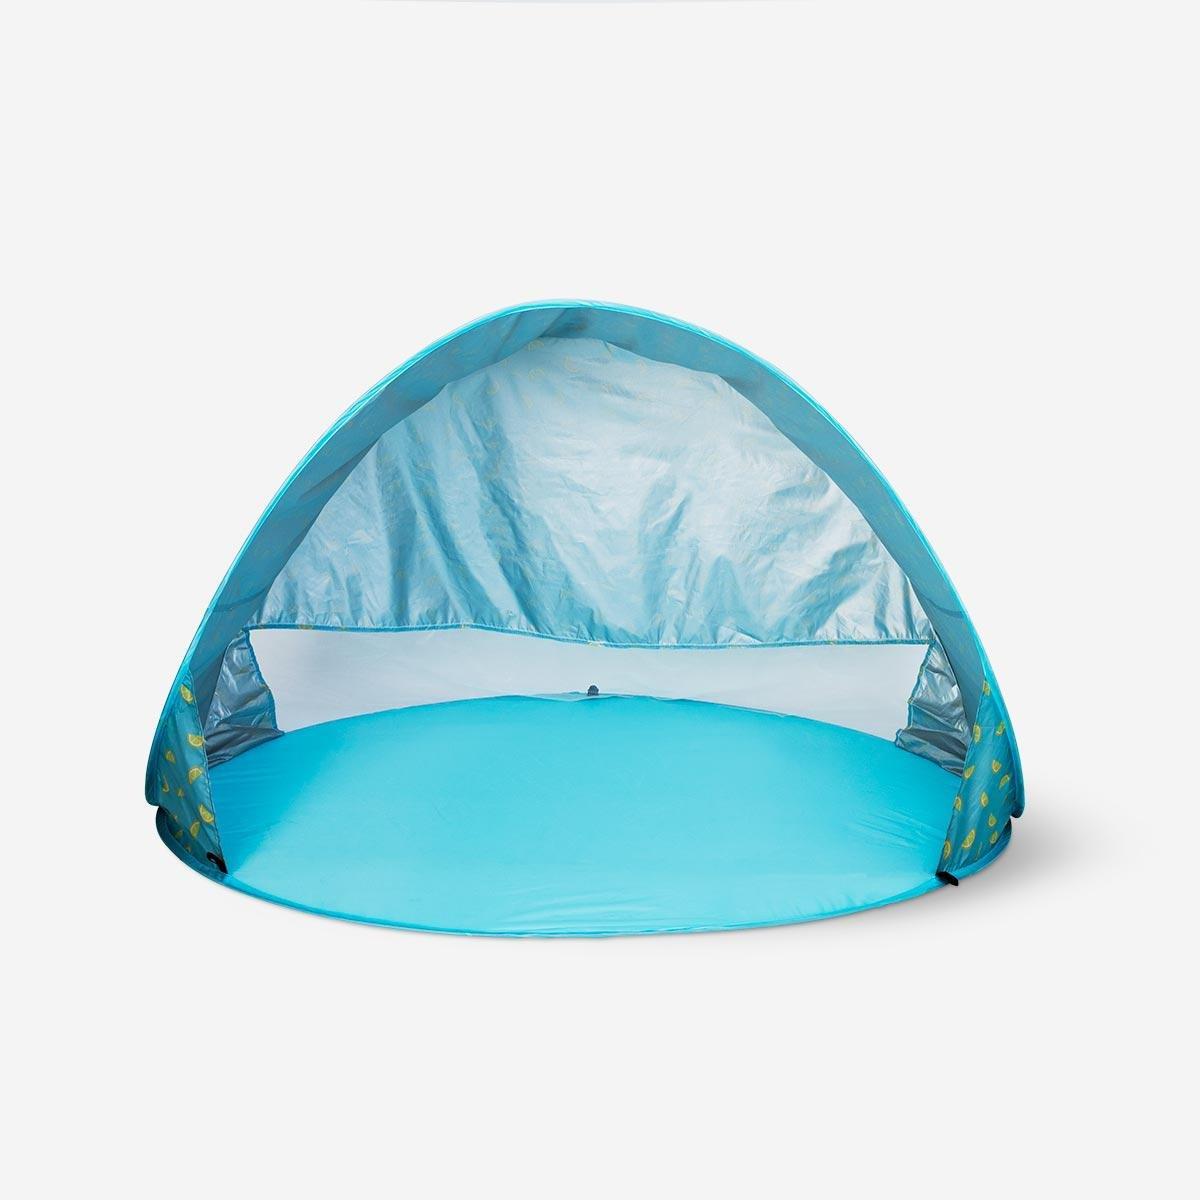 Turquoise beach tent